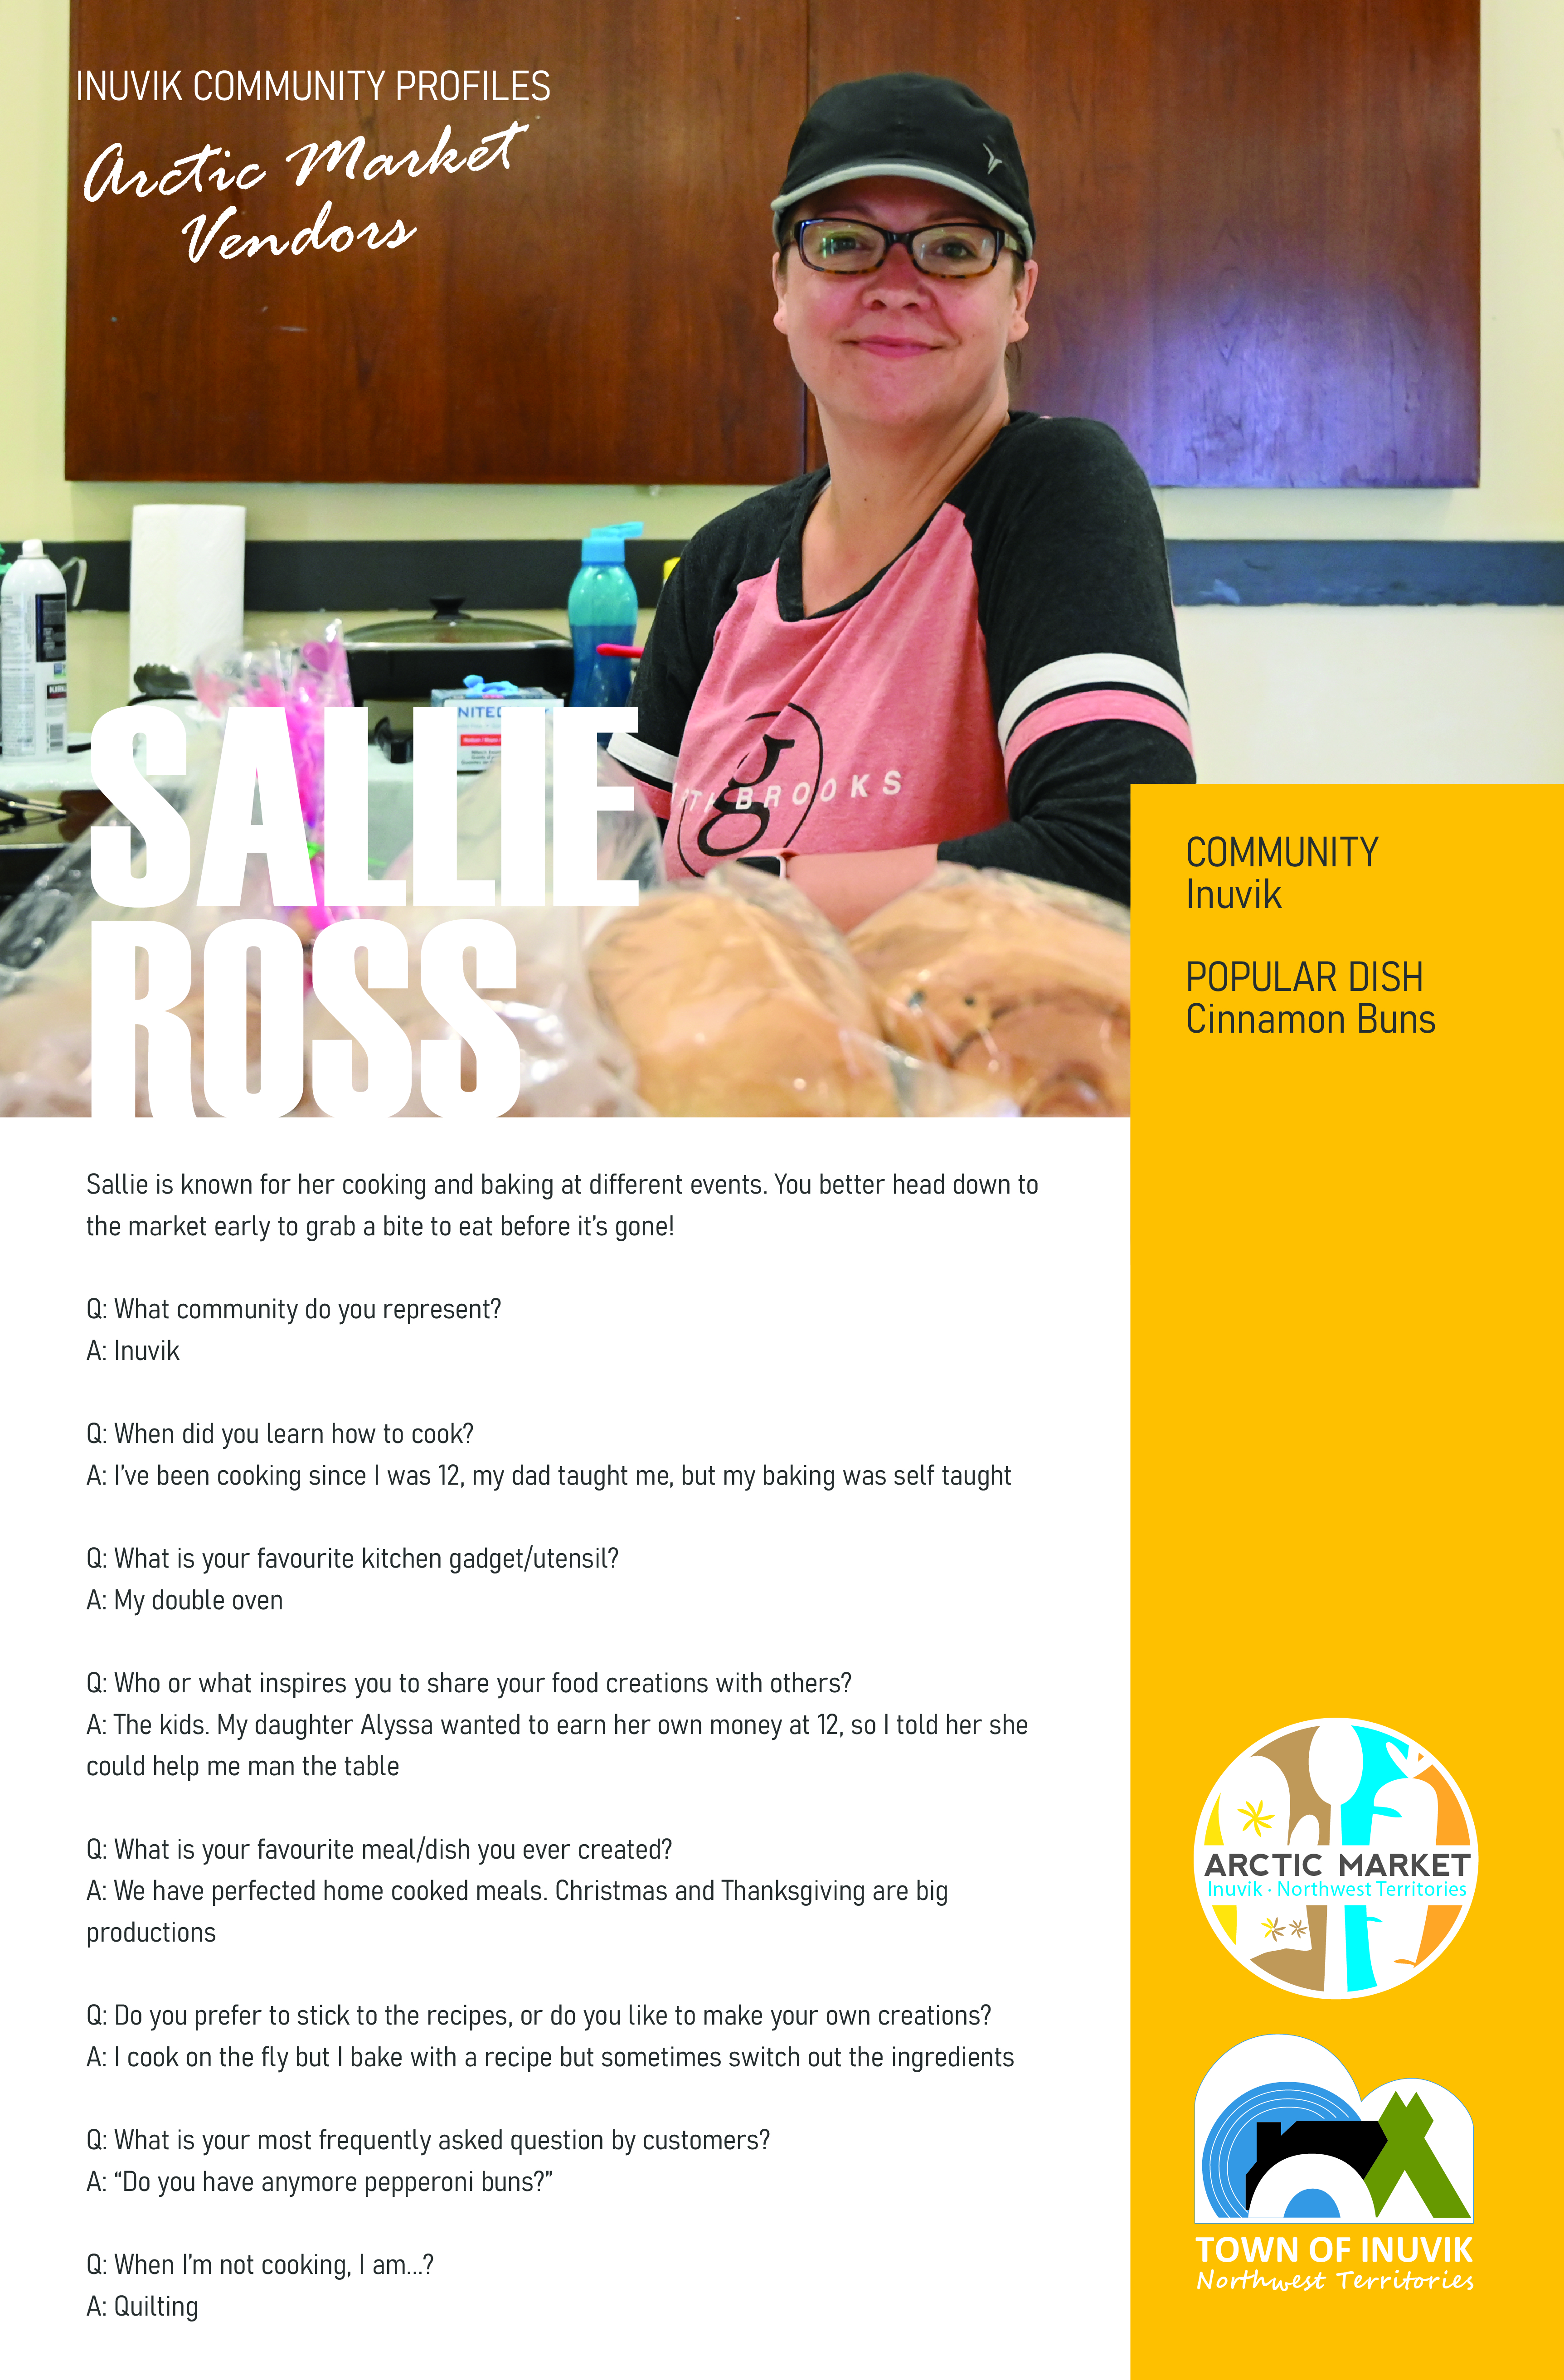 Sallie Ross Food Vendor Profile